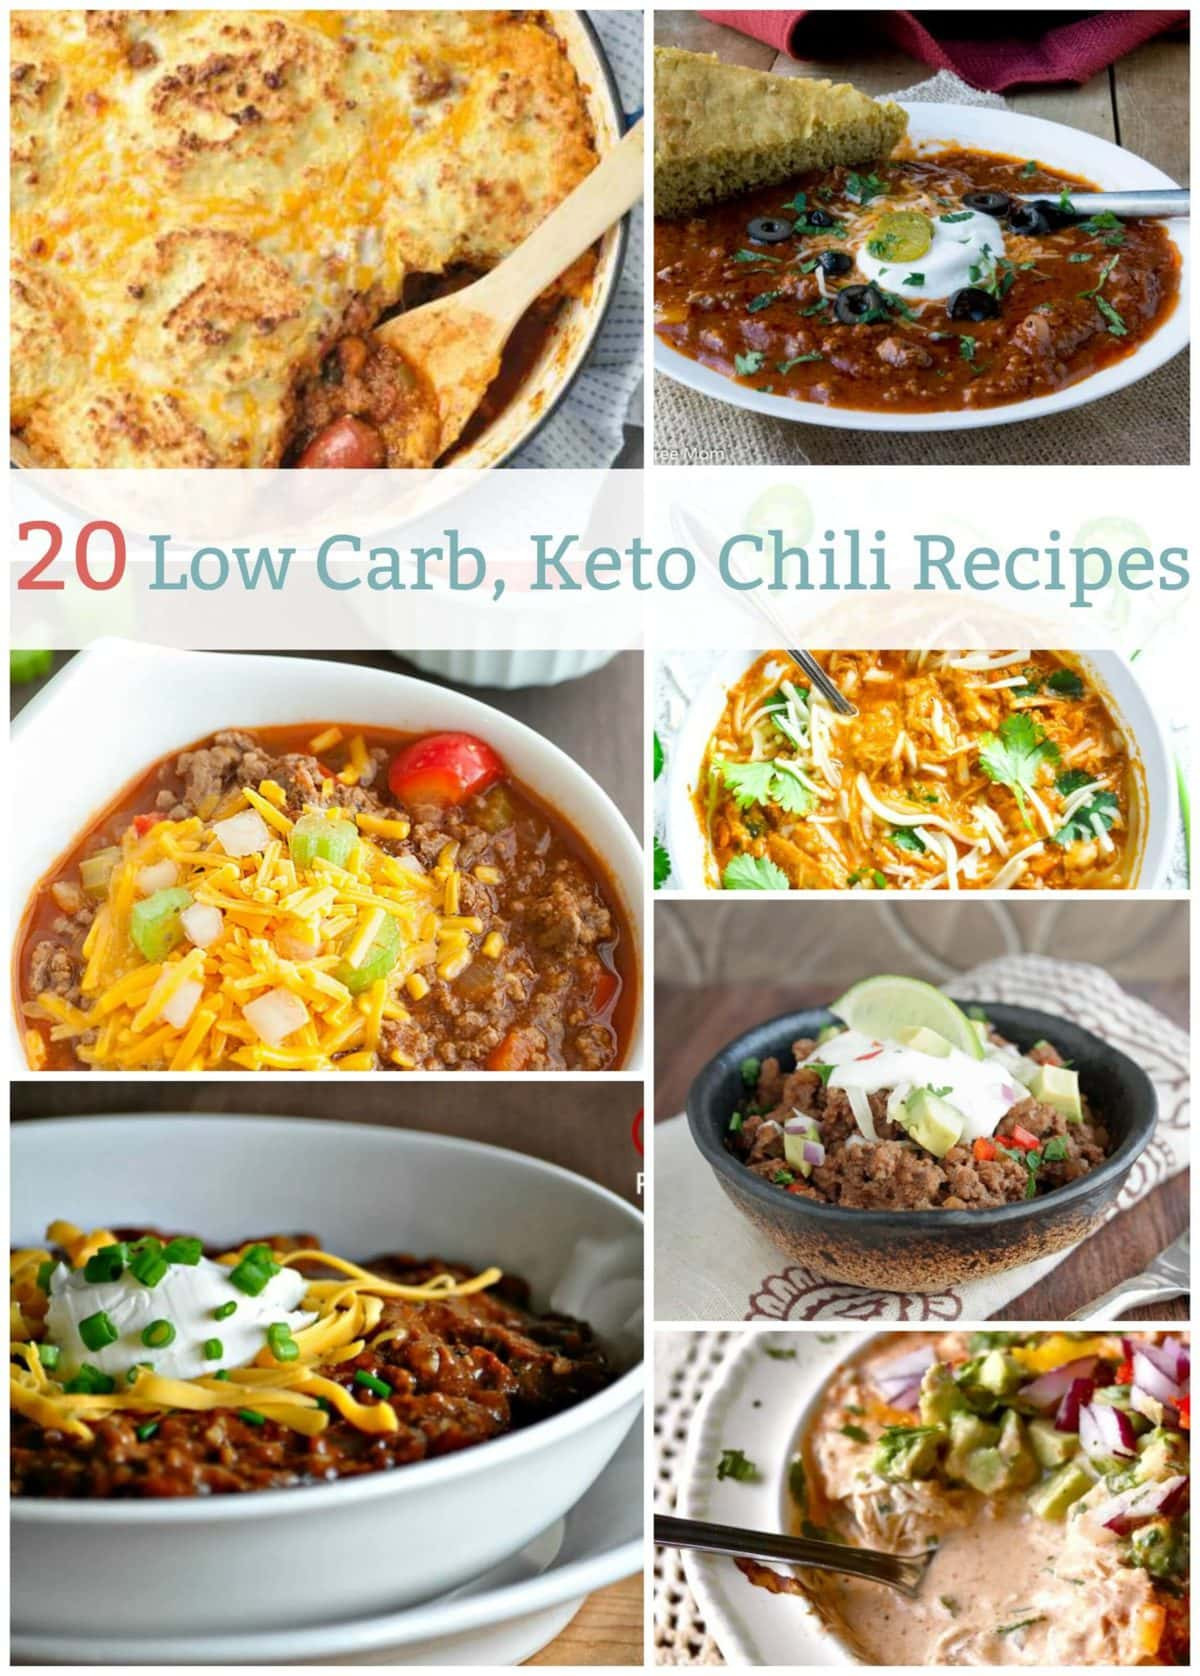 Low Carb Keto Recipes Ketogenic Diet
 20 Low Carb Keto Chili Recipes